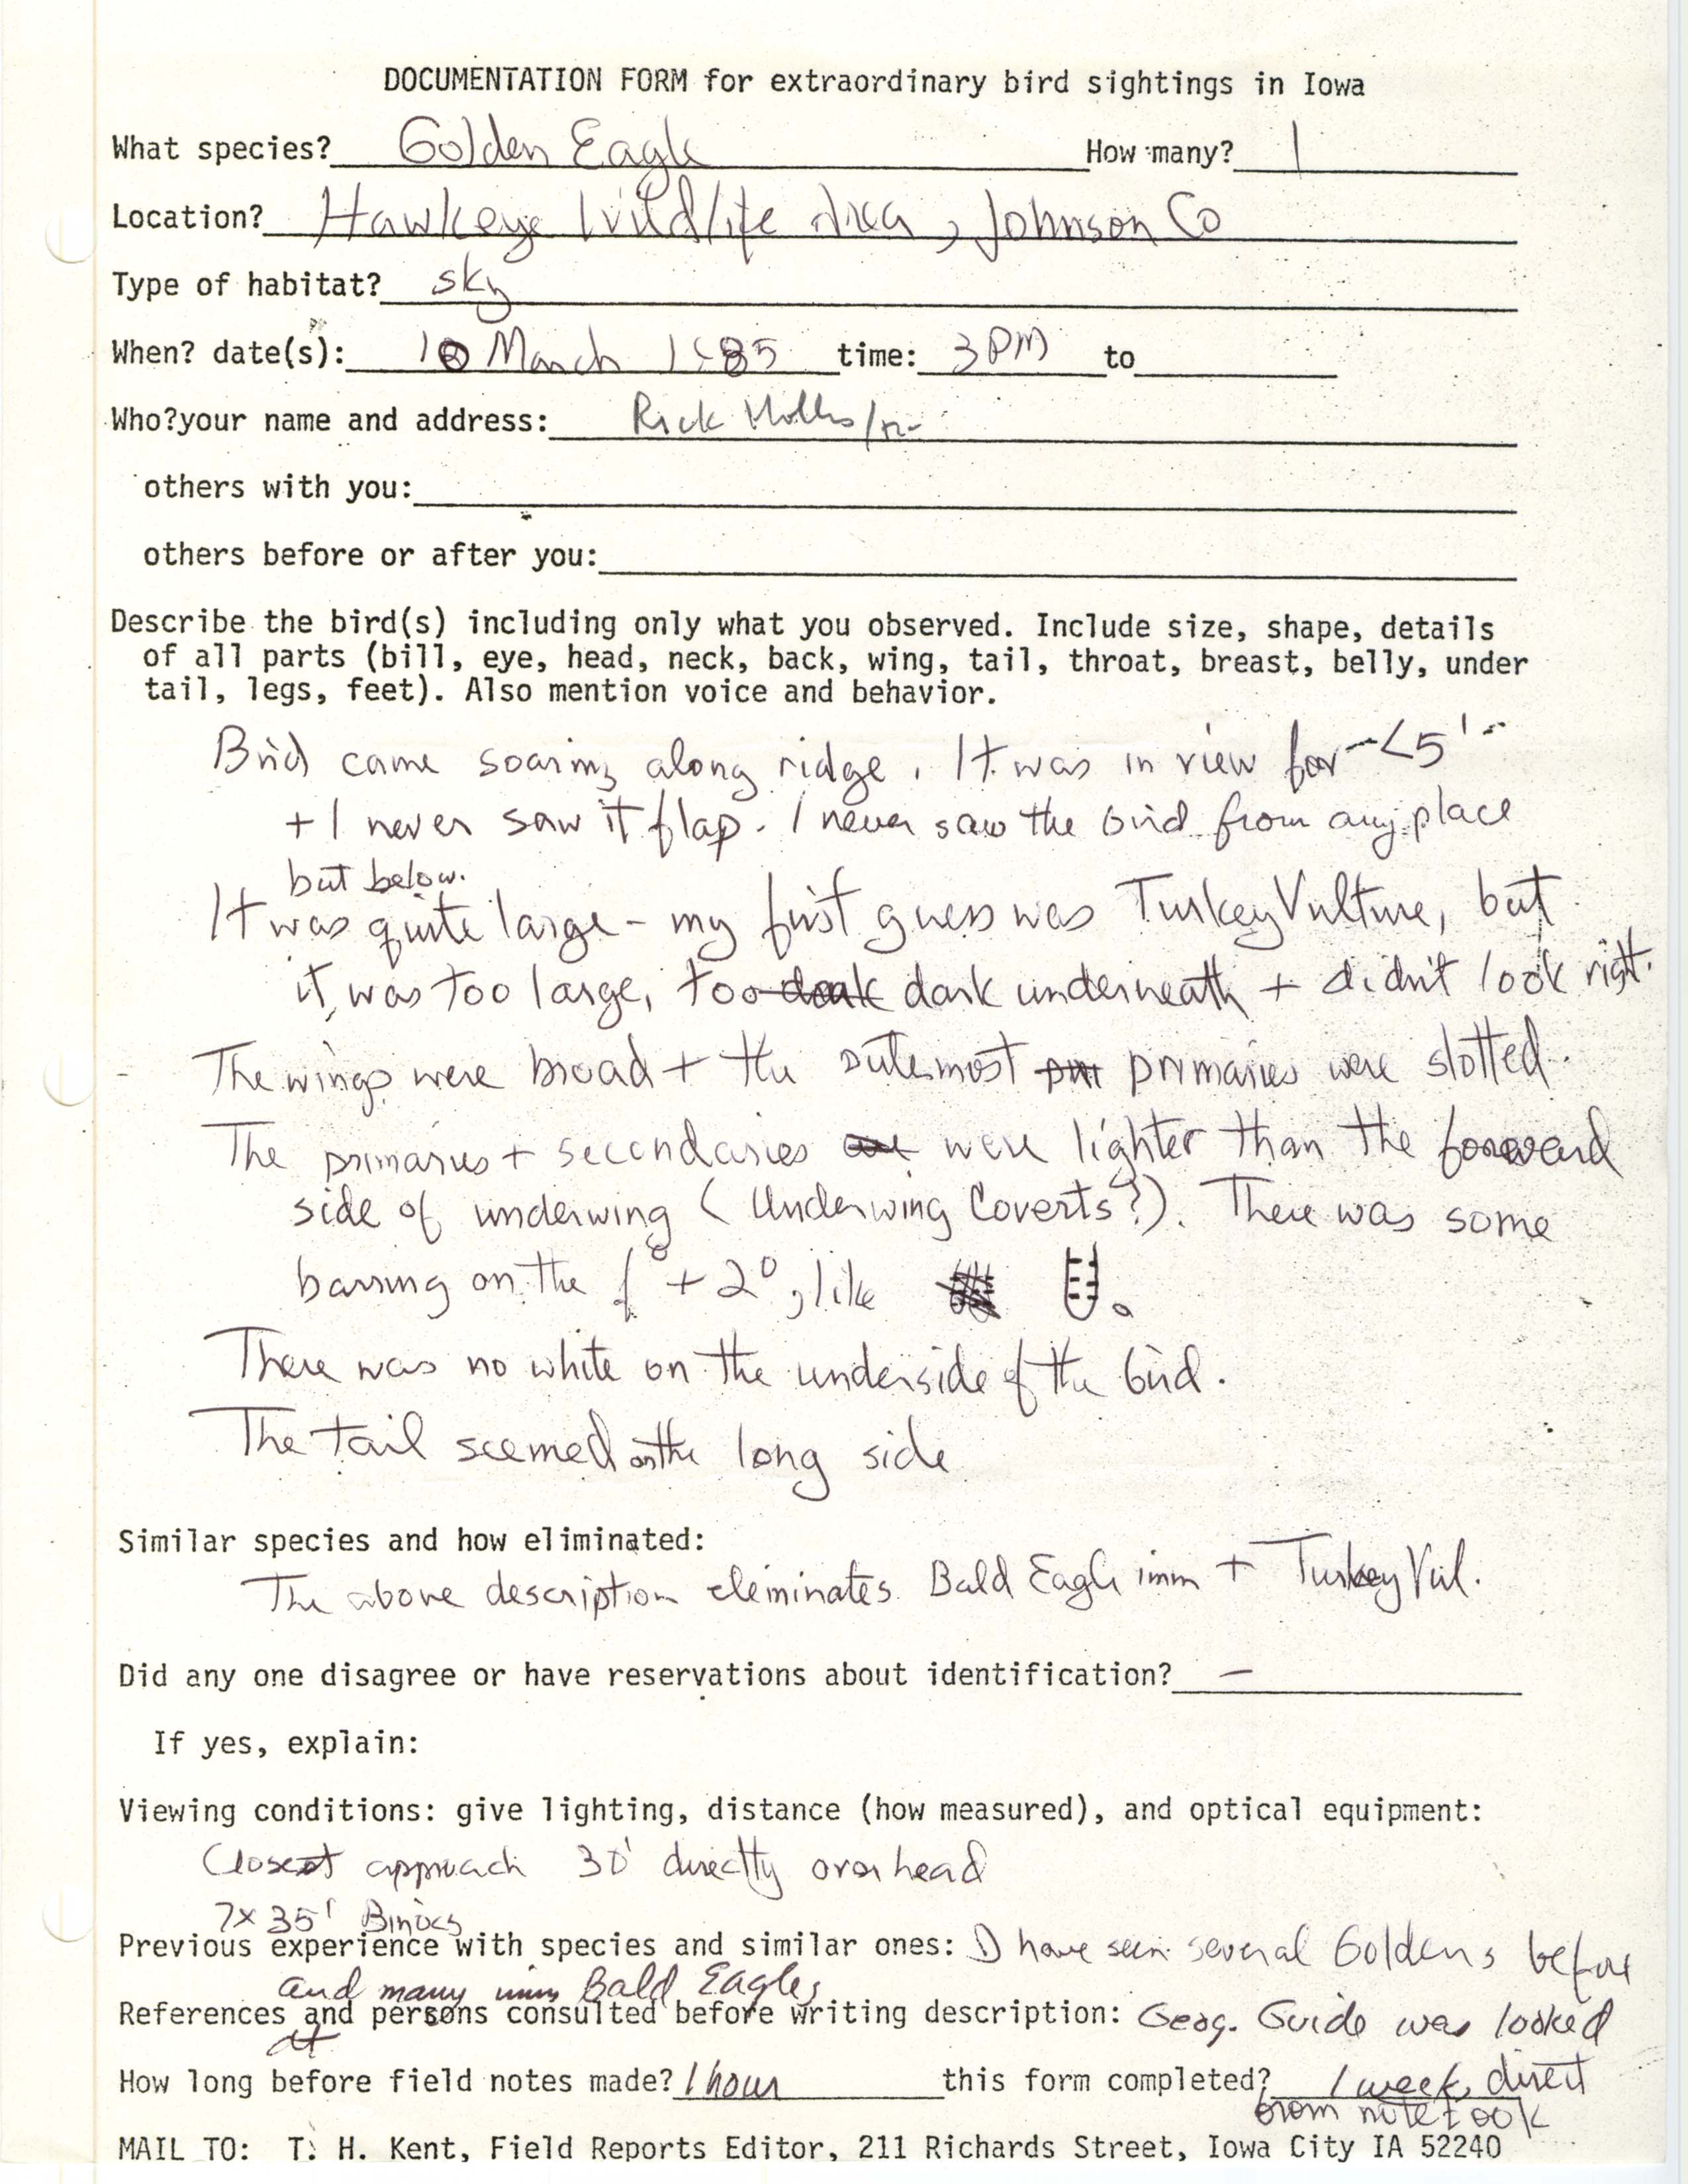 Rare bird documentation form for Golden Eagle at Hawkeye Wildlife Area, 1985